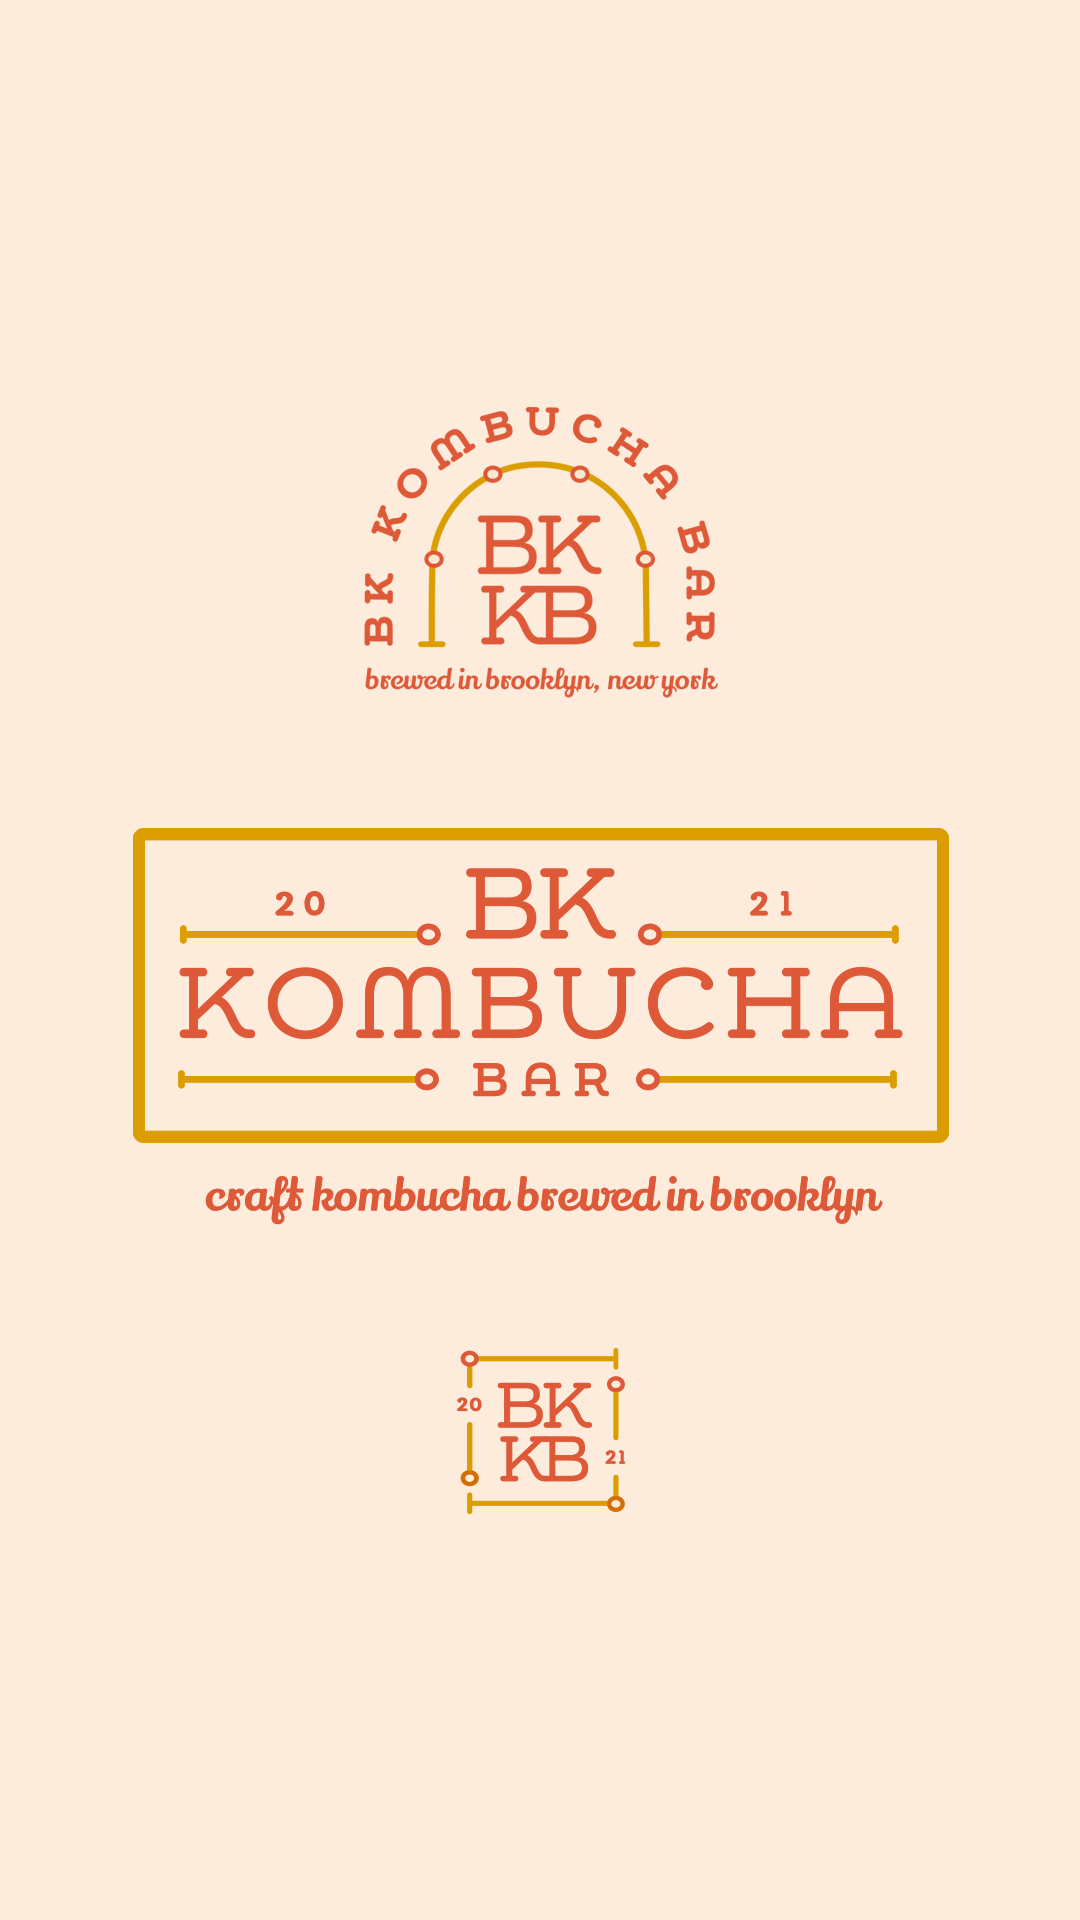 plantspacestudio-brooklyn-kombucha-bar-branding-logo-blush.png